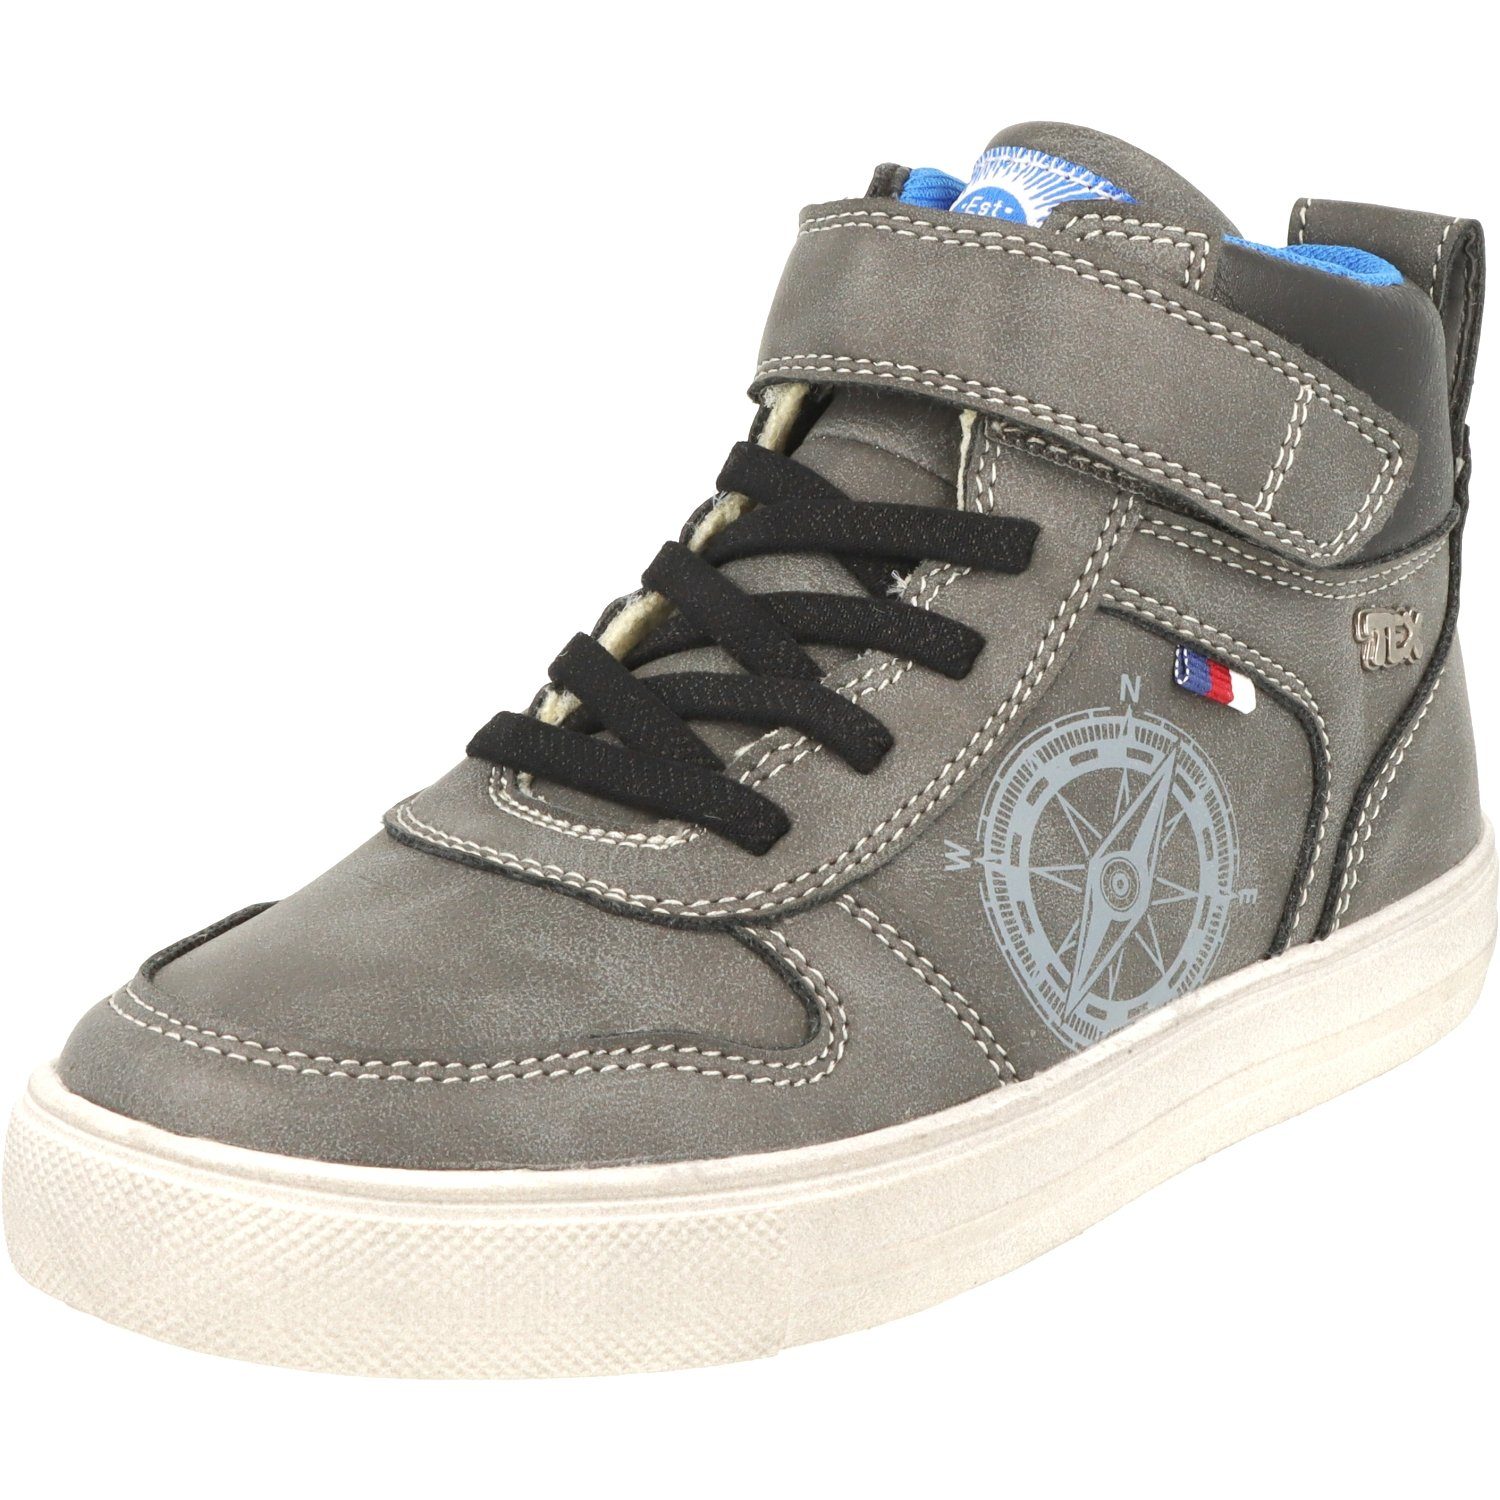 Indigo Jungen Schuhe 451-074 Schnürschuhe Hi-Top Sneaker Wasserabweisend Dk.Grey | Sneaker high